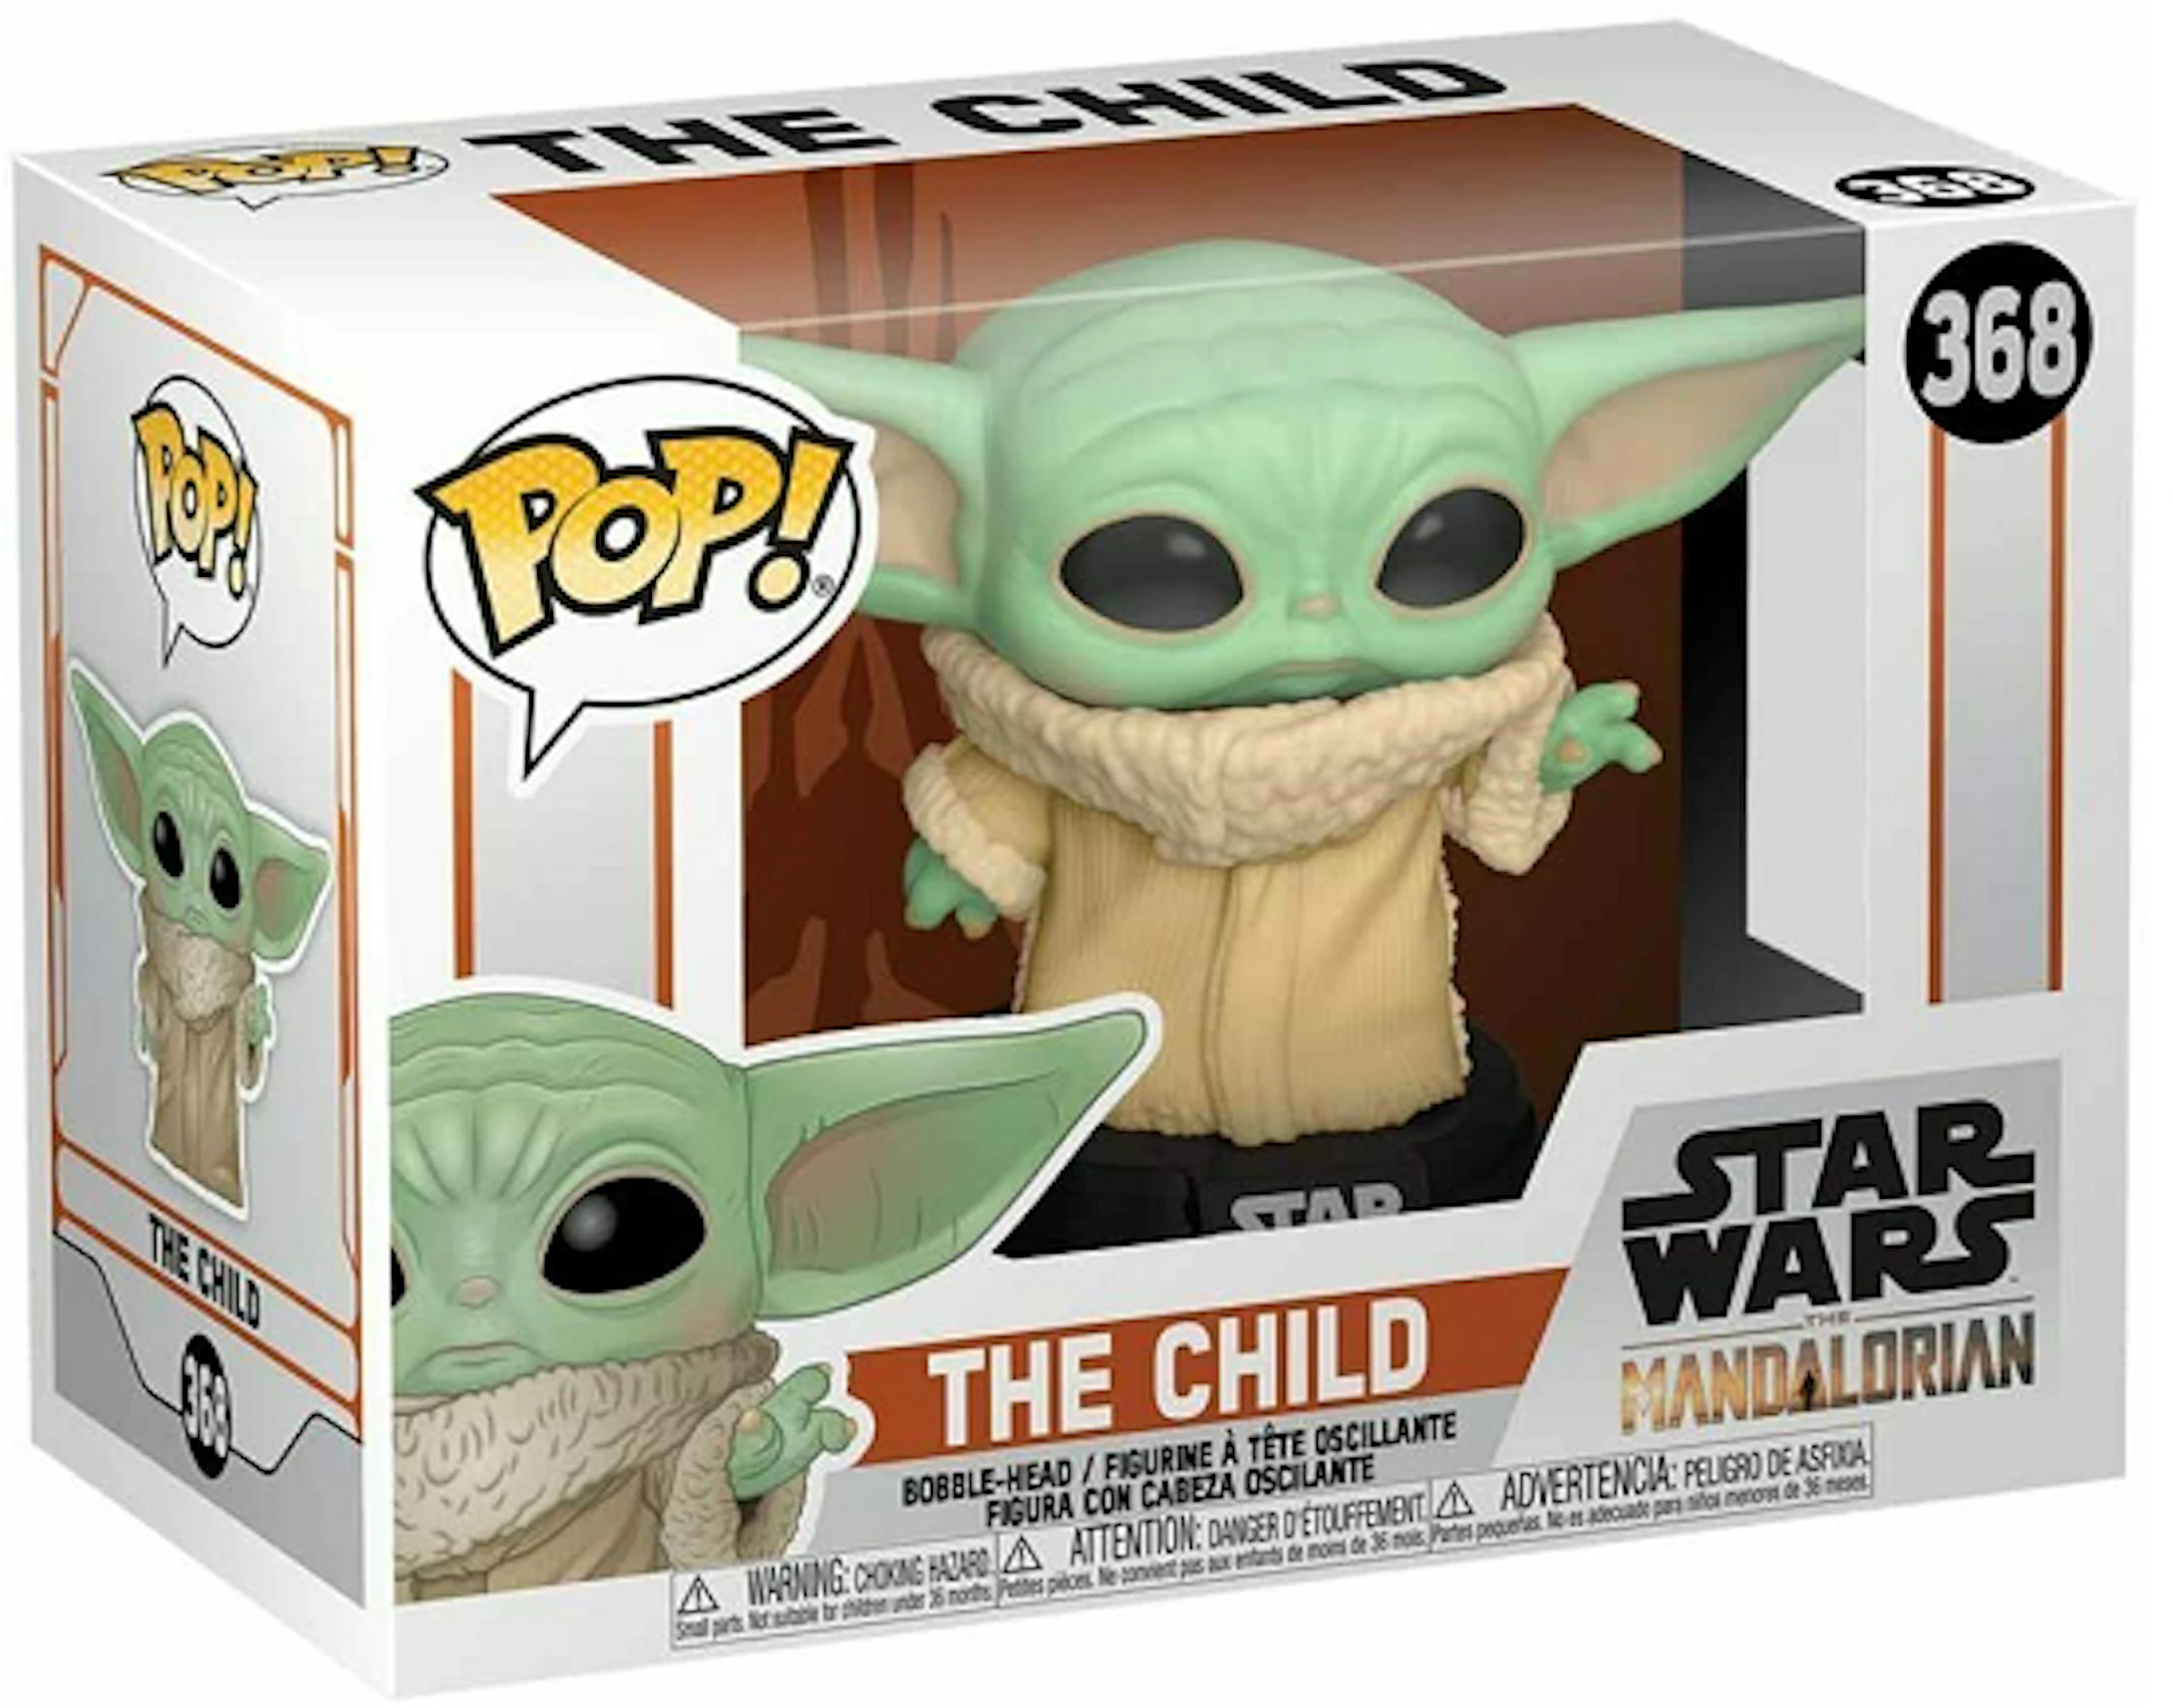 Grappig ironie winnen Funko Pop! Star Wars The Mandalorian The Child (Baby Yoda) Bobble-Head  Figure #368 - US